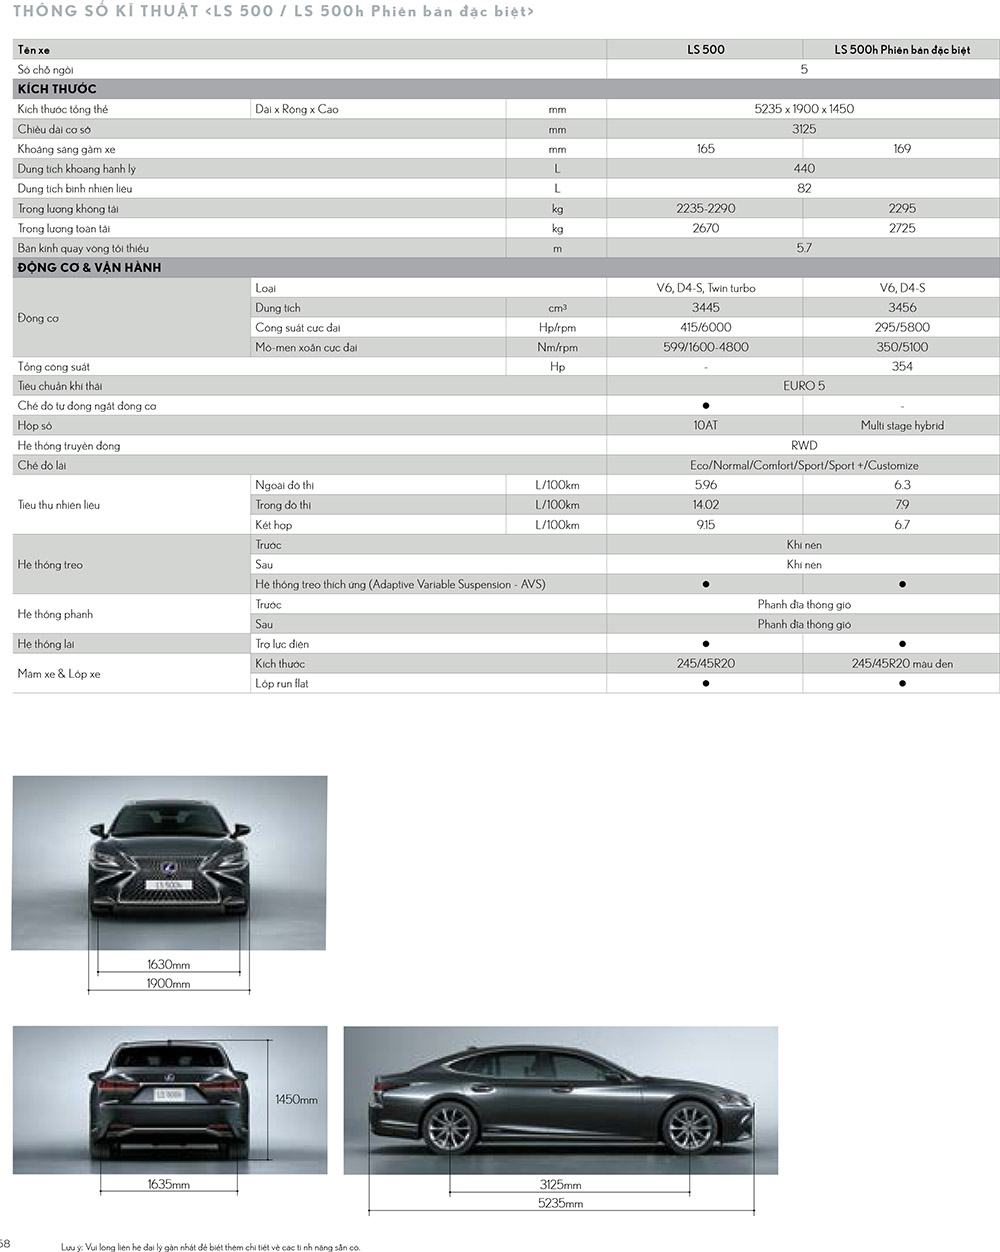 Thông số kỹ thuật xe Lexus LS 500